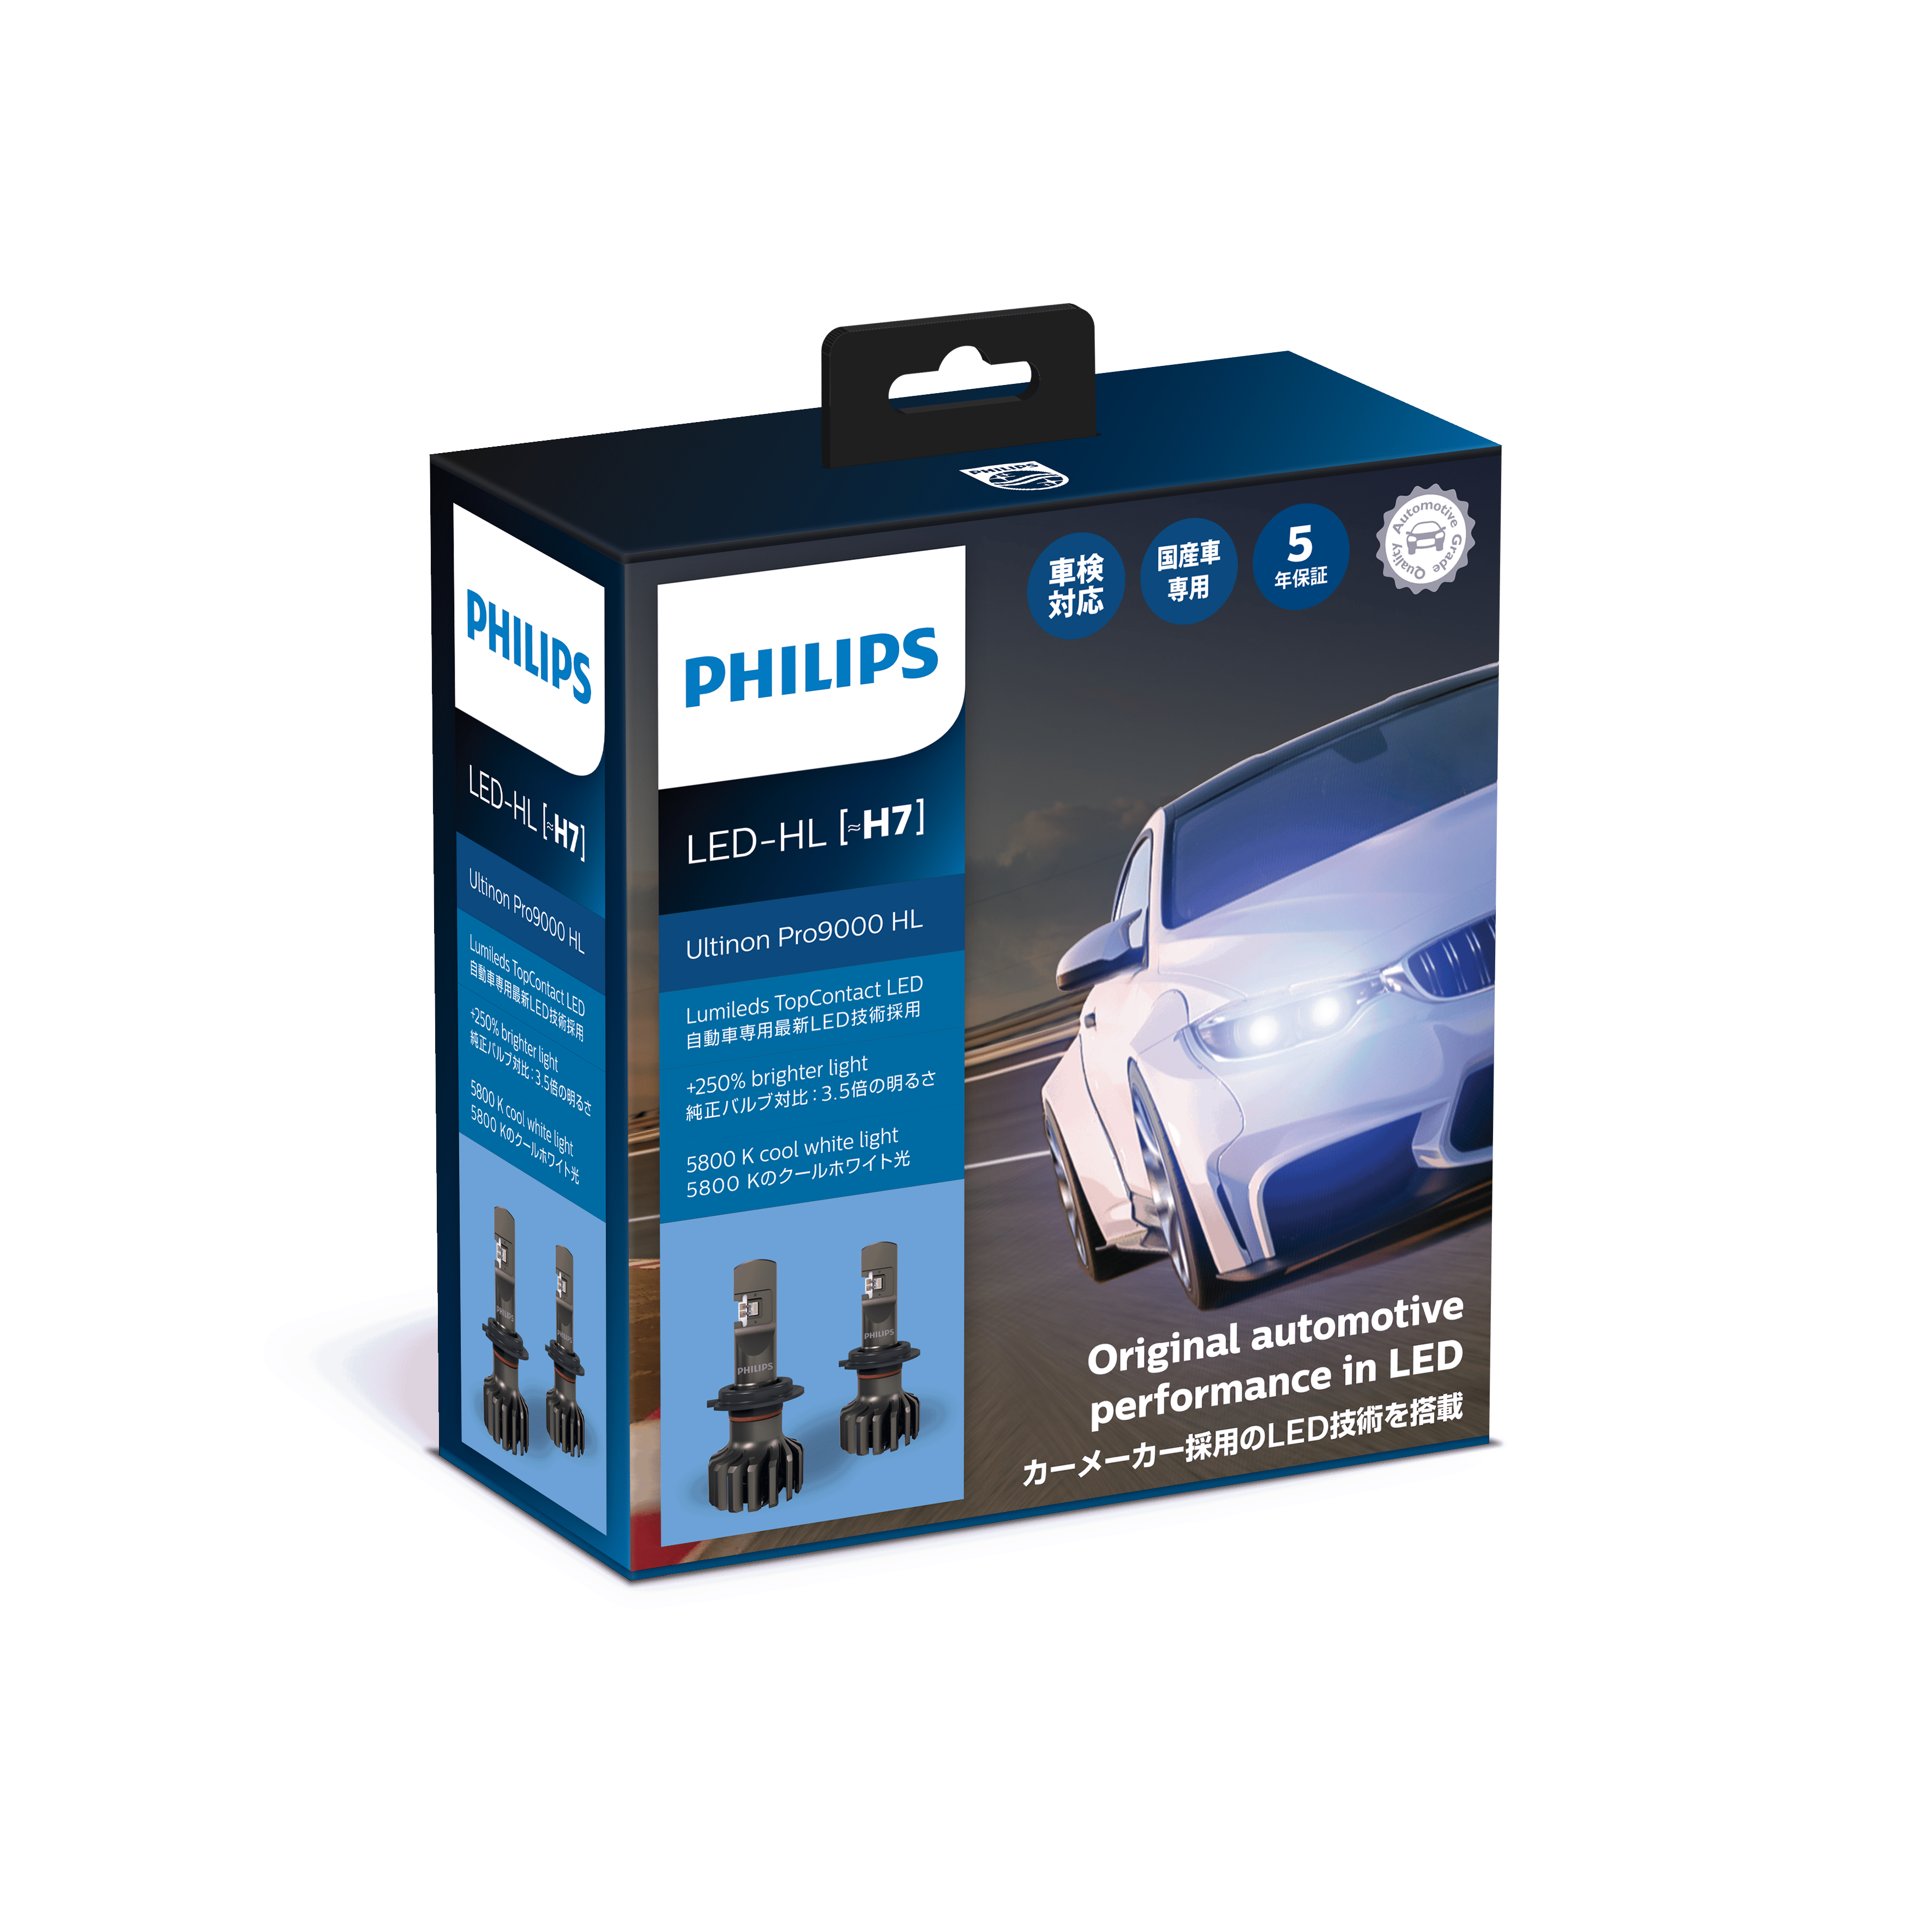 Seminarie Gemiddeld hulp in de huishouding New Philips LED headlight bulb wins Product of the Year award in Japan |  Lumileds